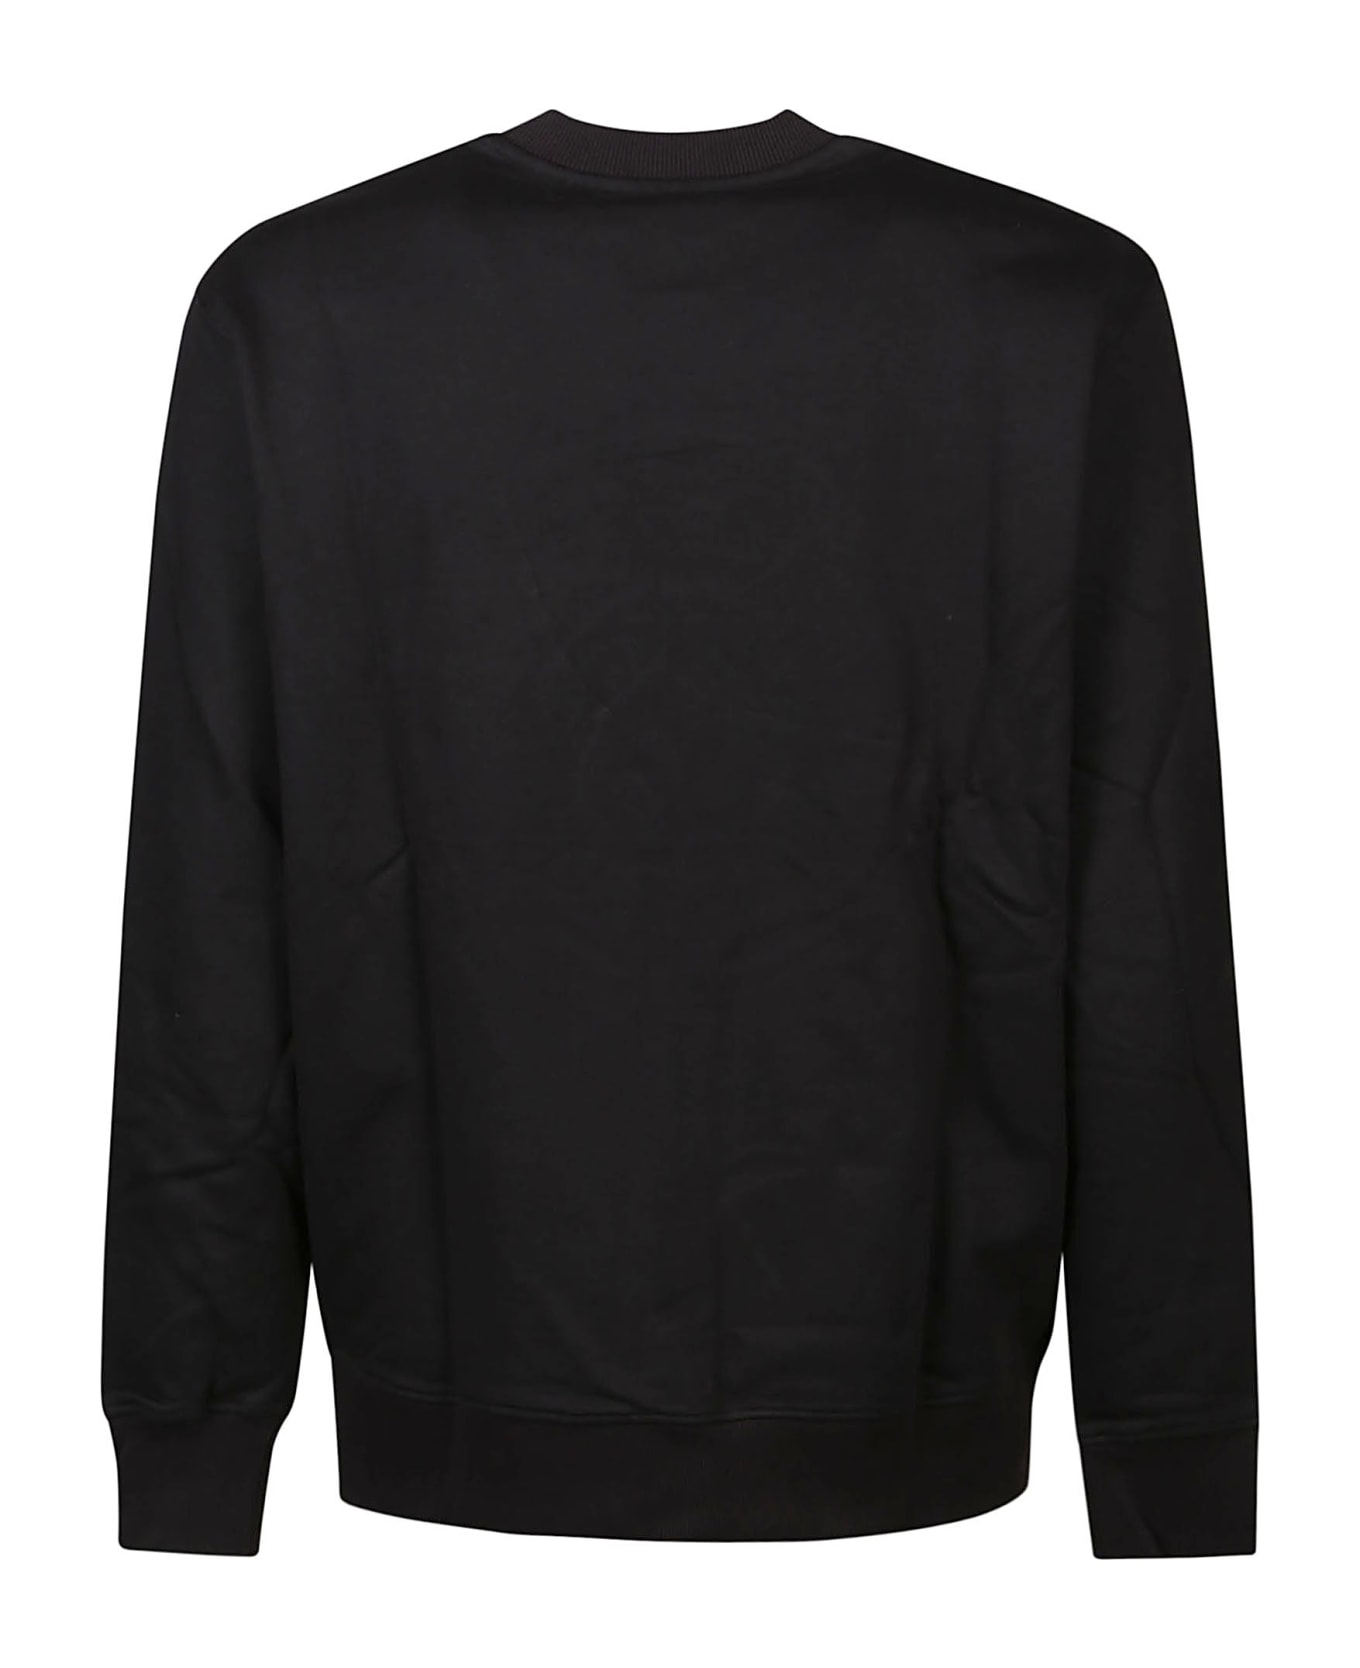 Versace Jeans Couture V-emblem Sweatshirt - Black/gold